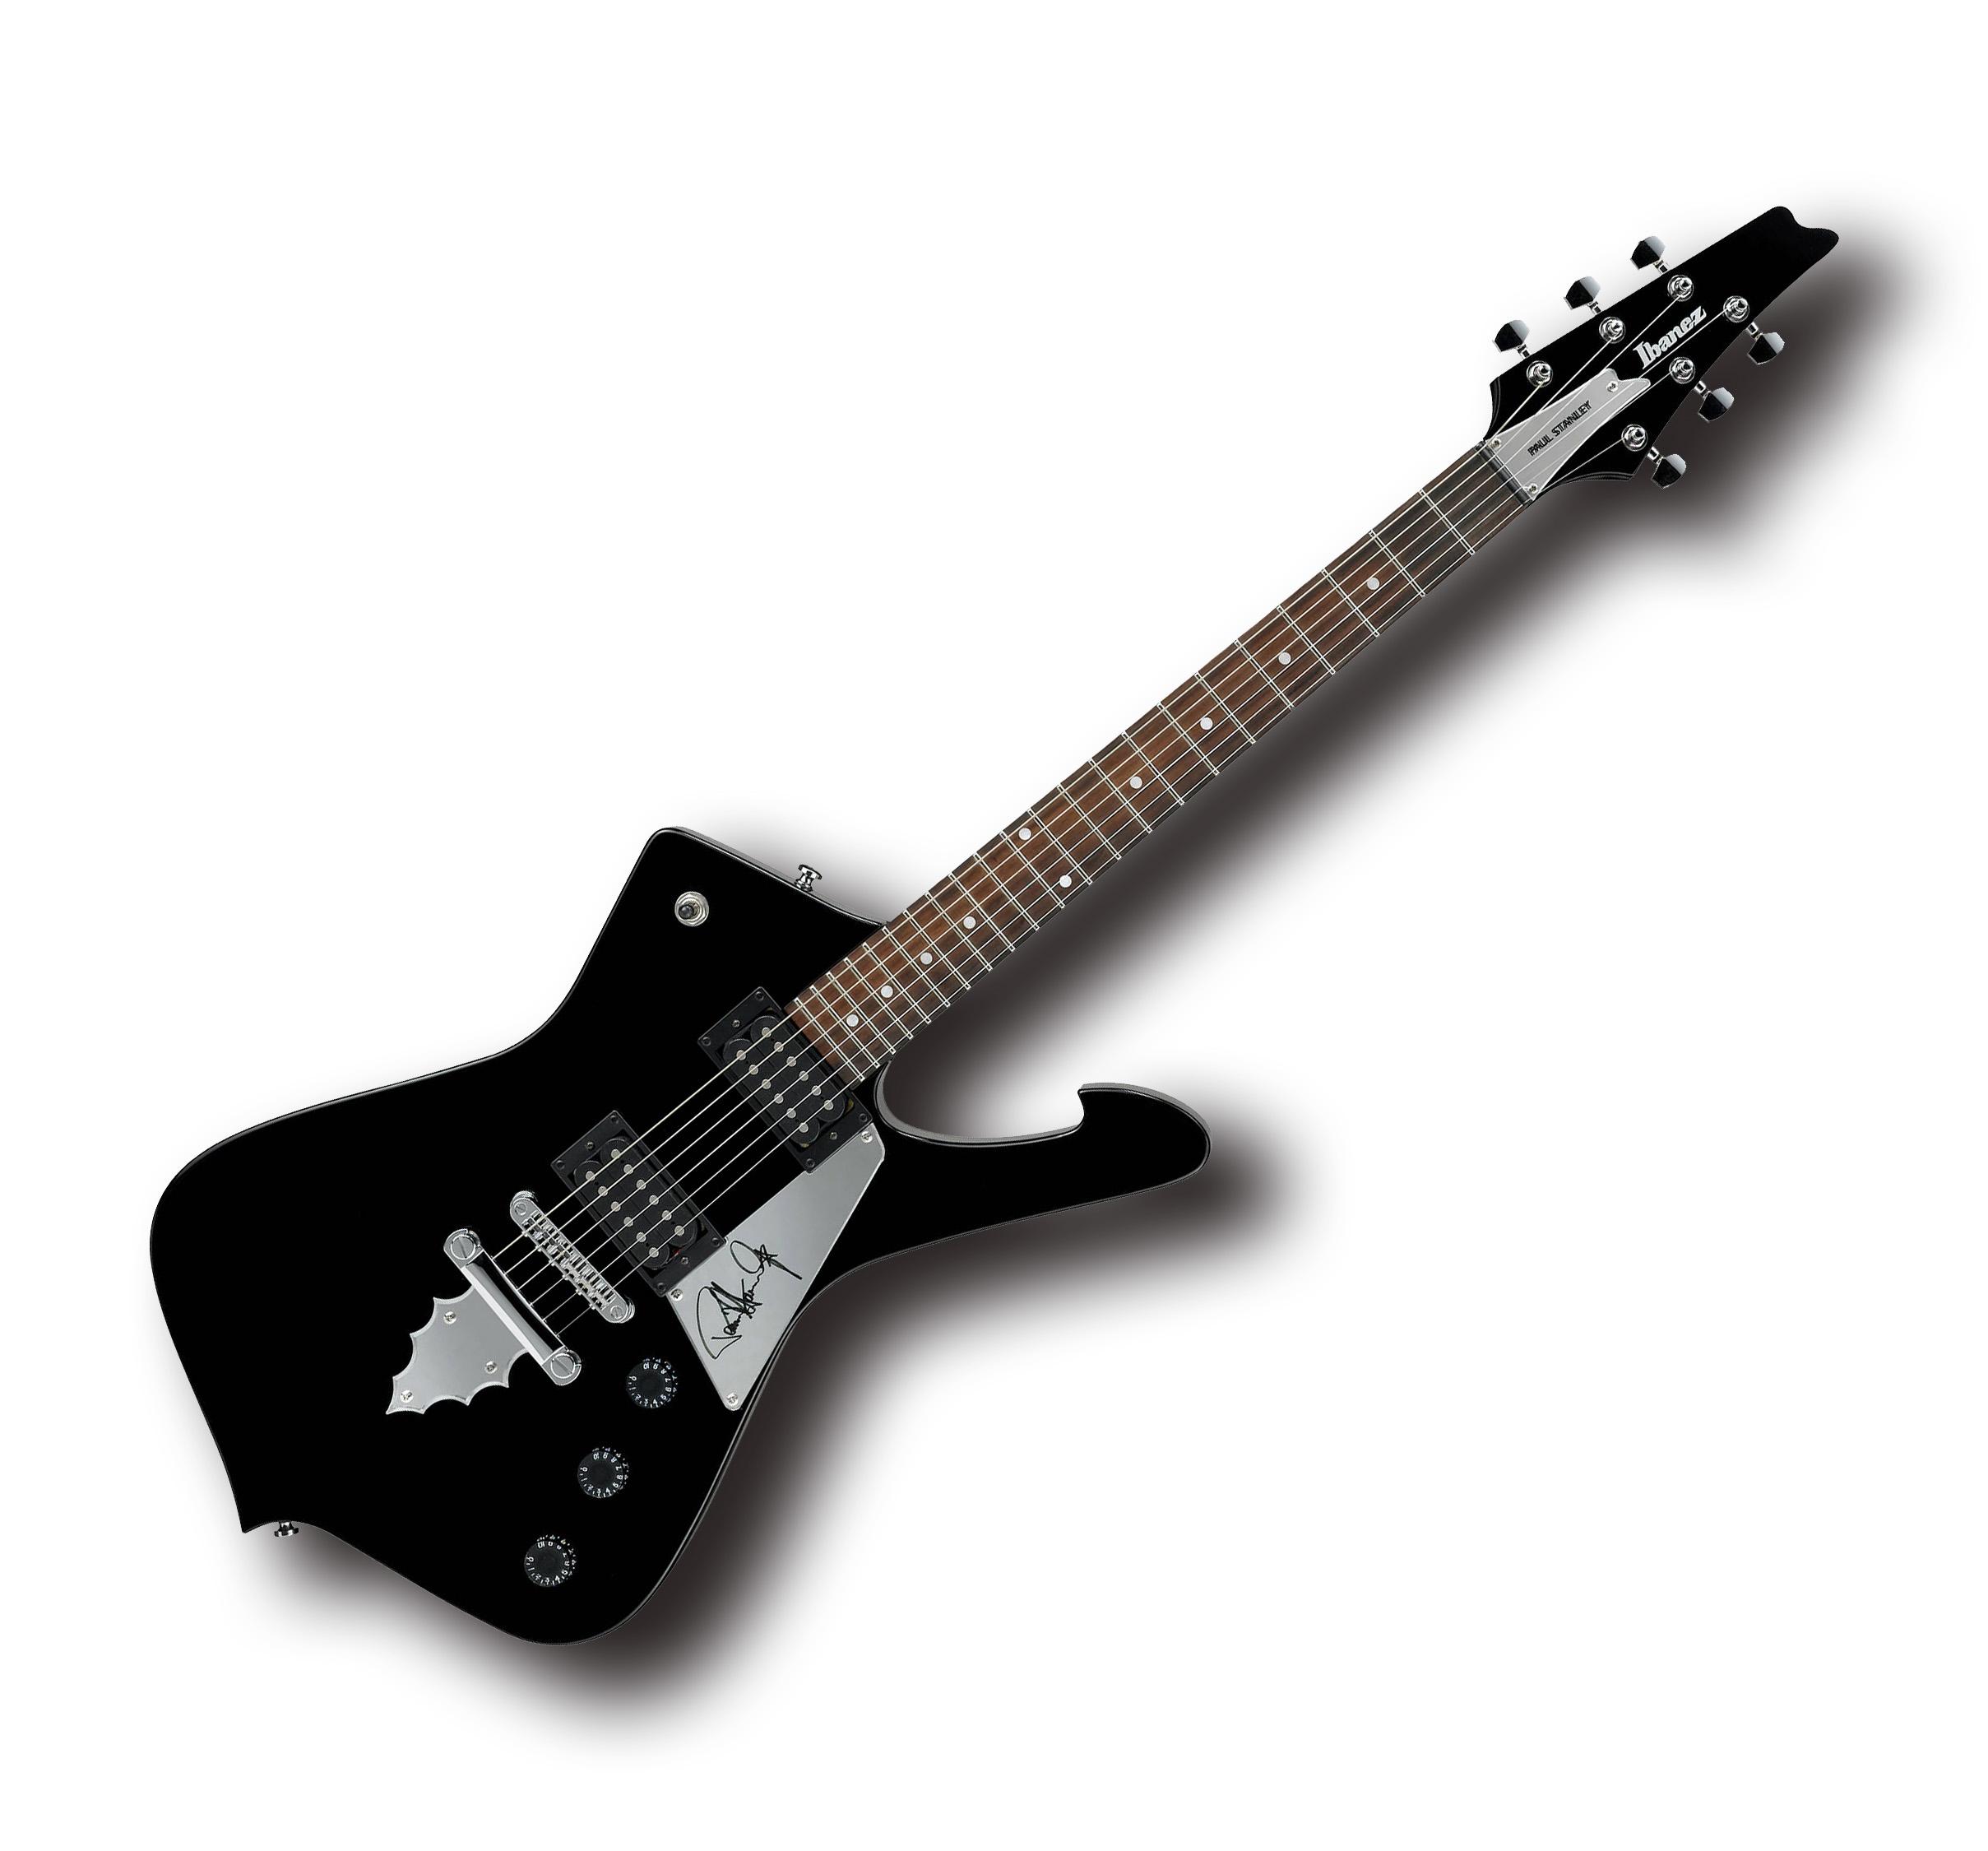 Ibañez - Guitarra Eléctrica Paul Stanley con Funda, Color: Negra Mod.PS40-BK_66